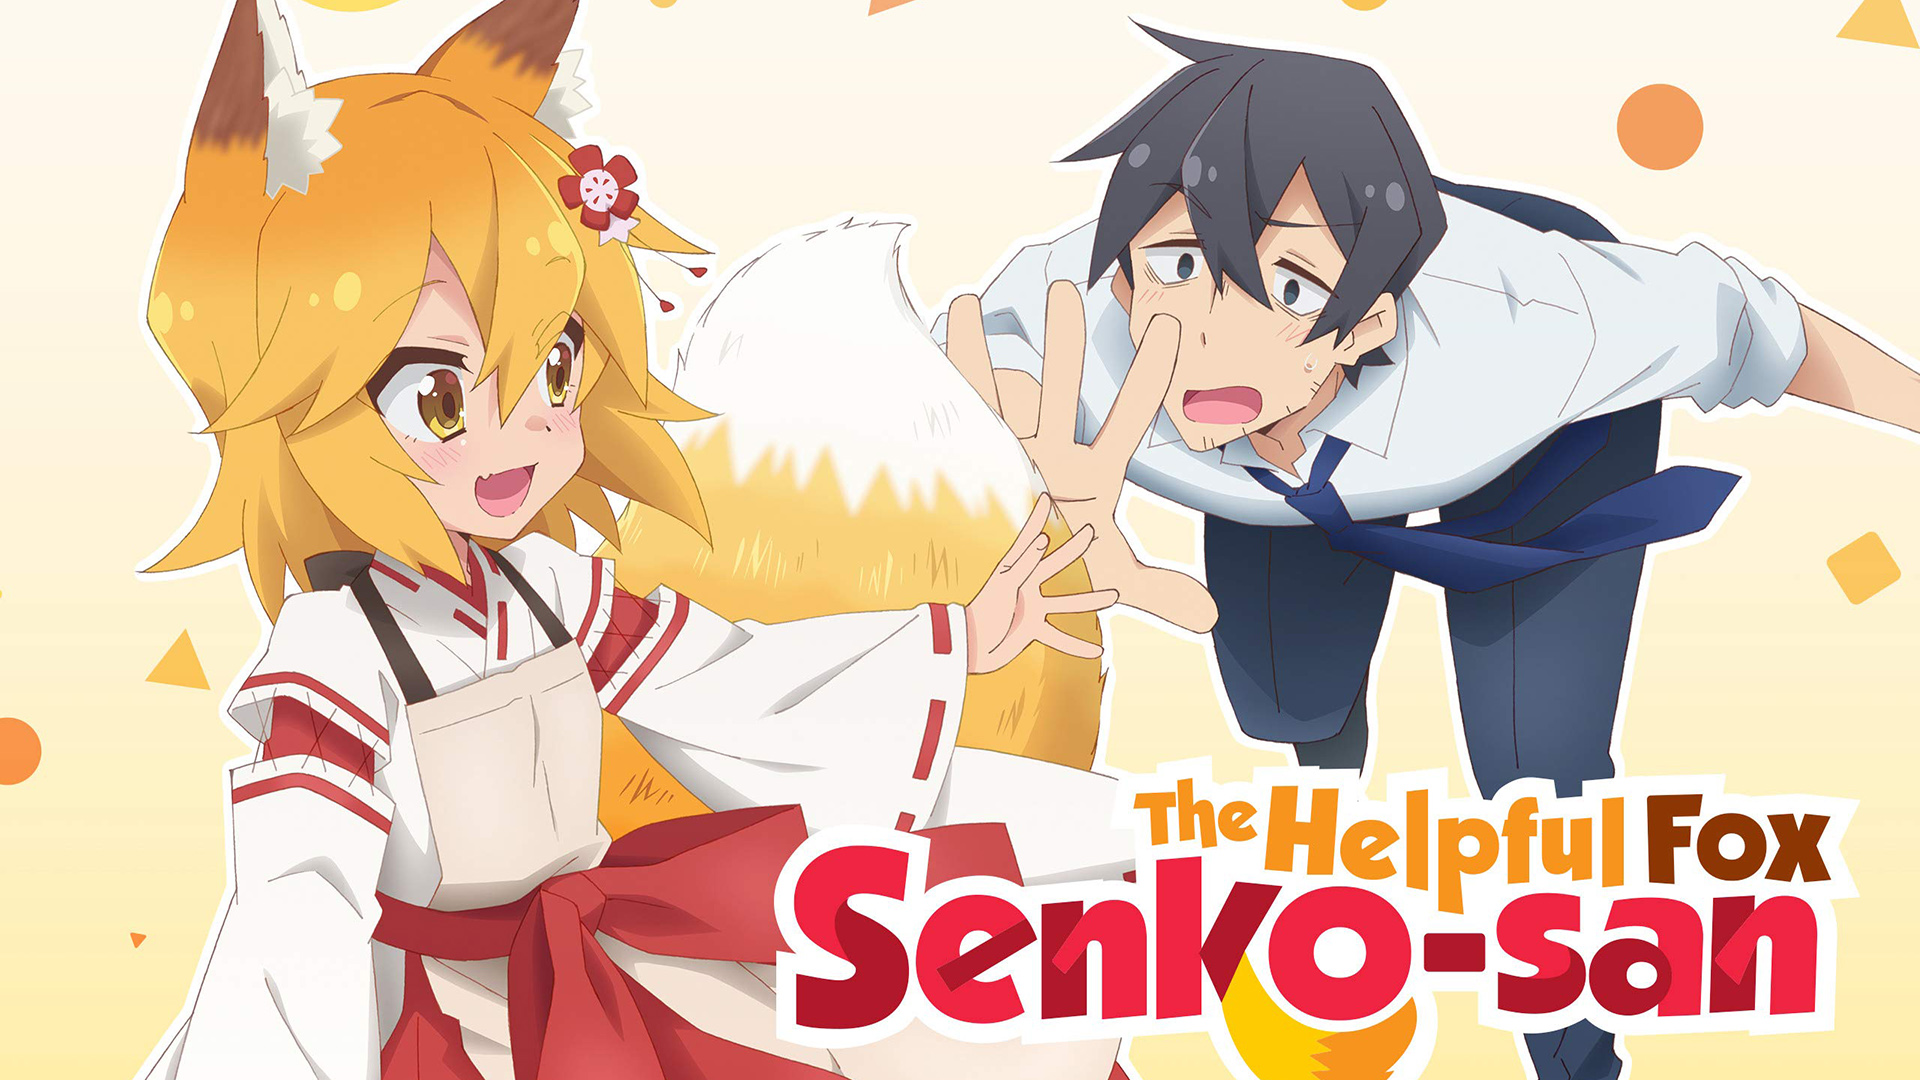 2. "The Helpful Fox Senko-san" - wide 5